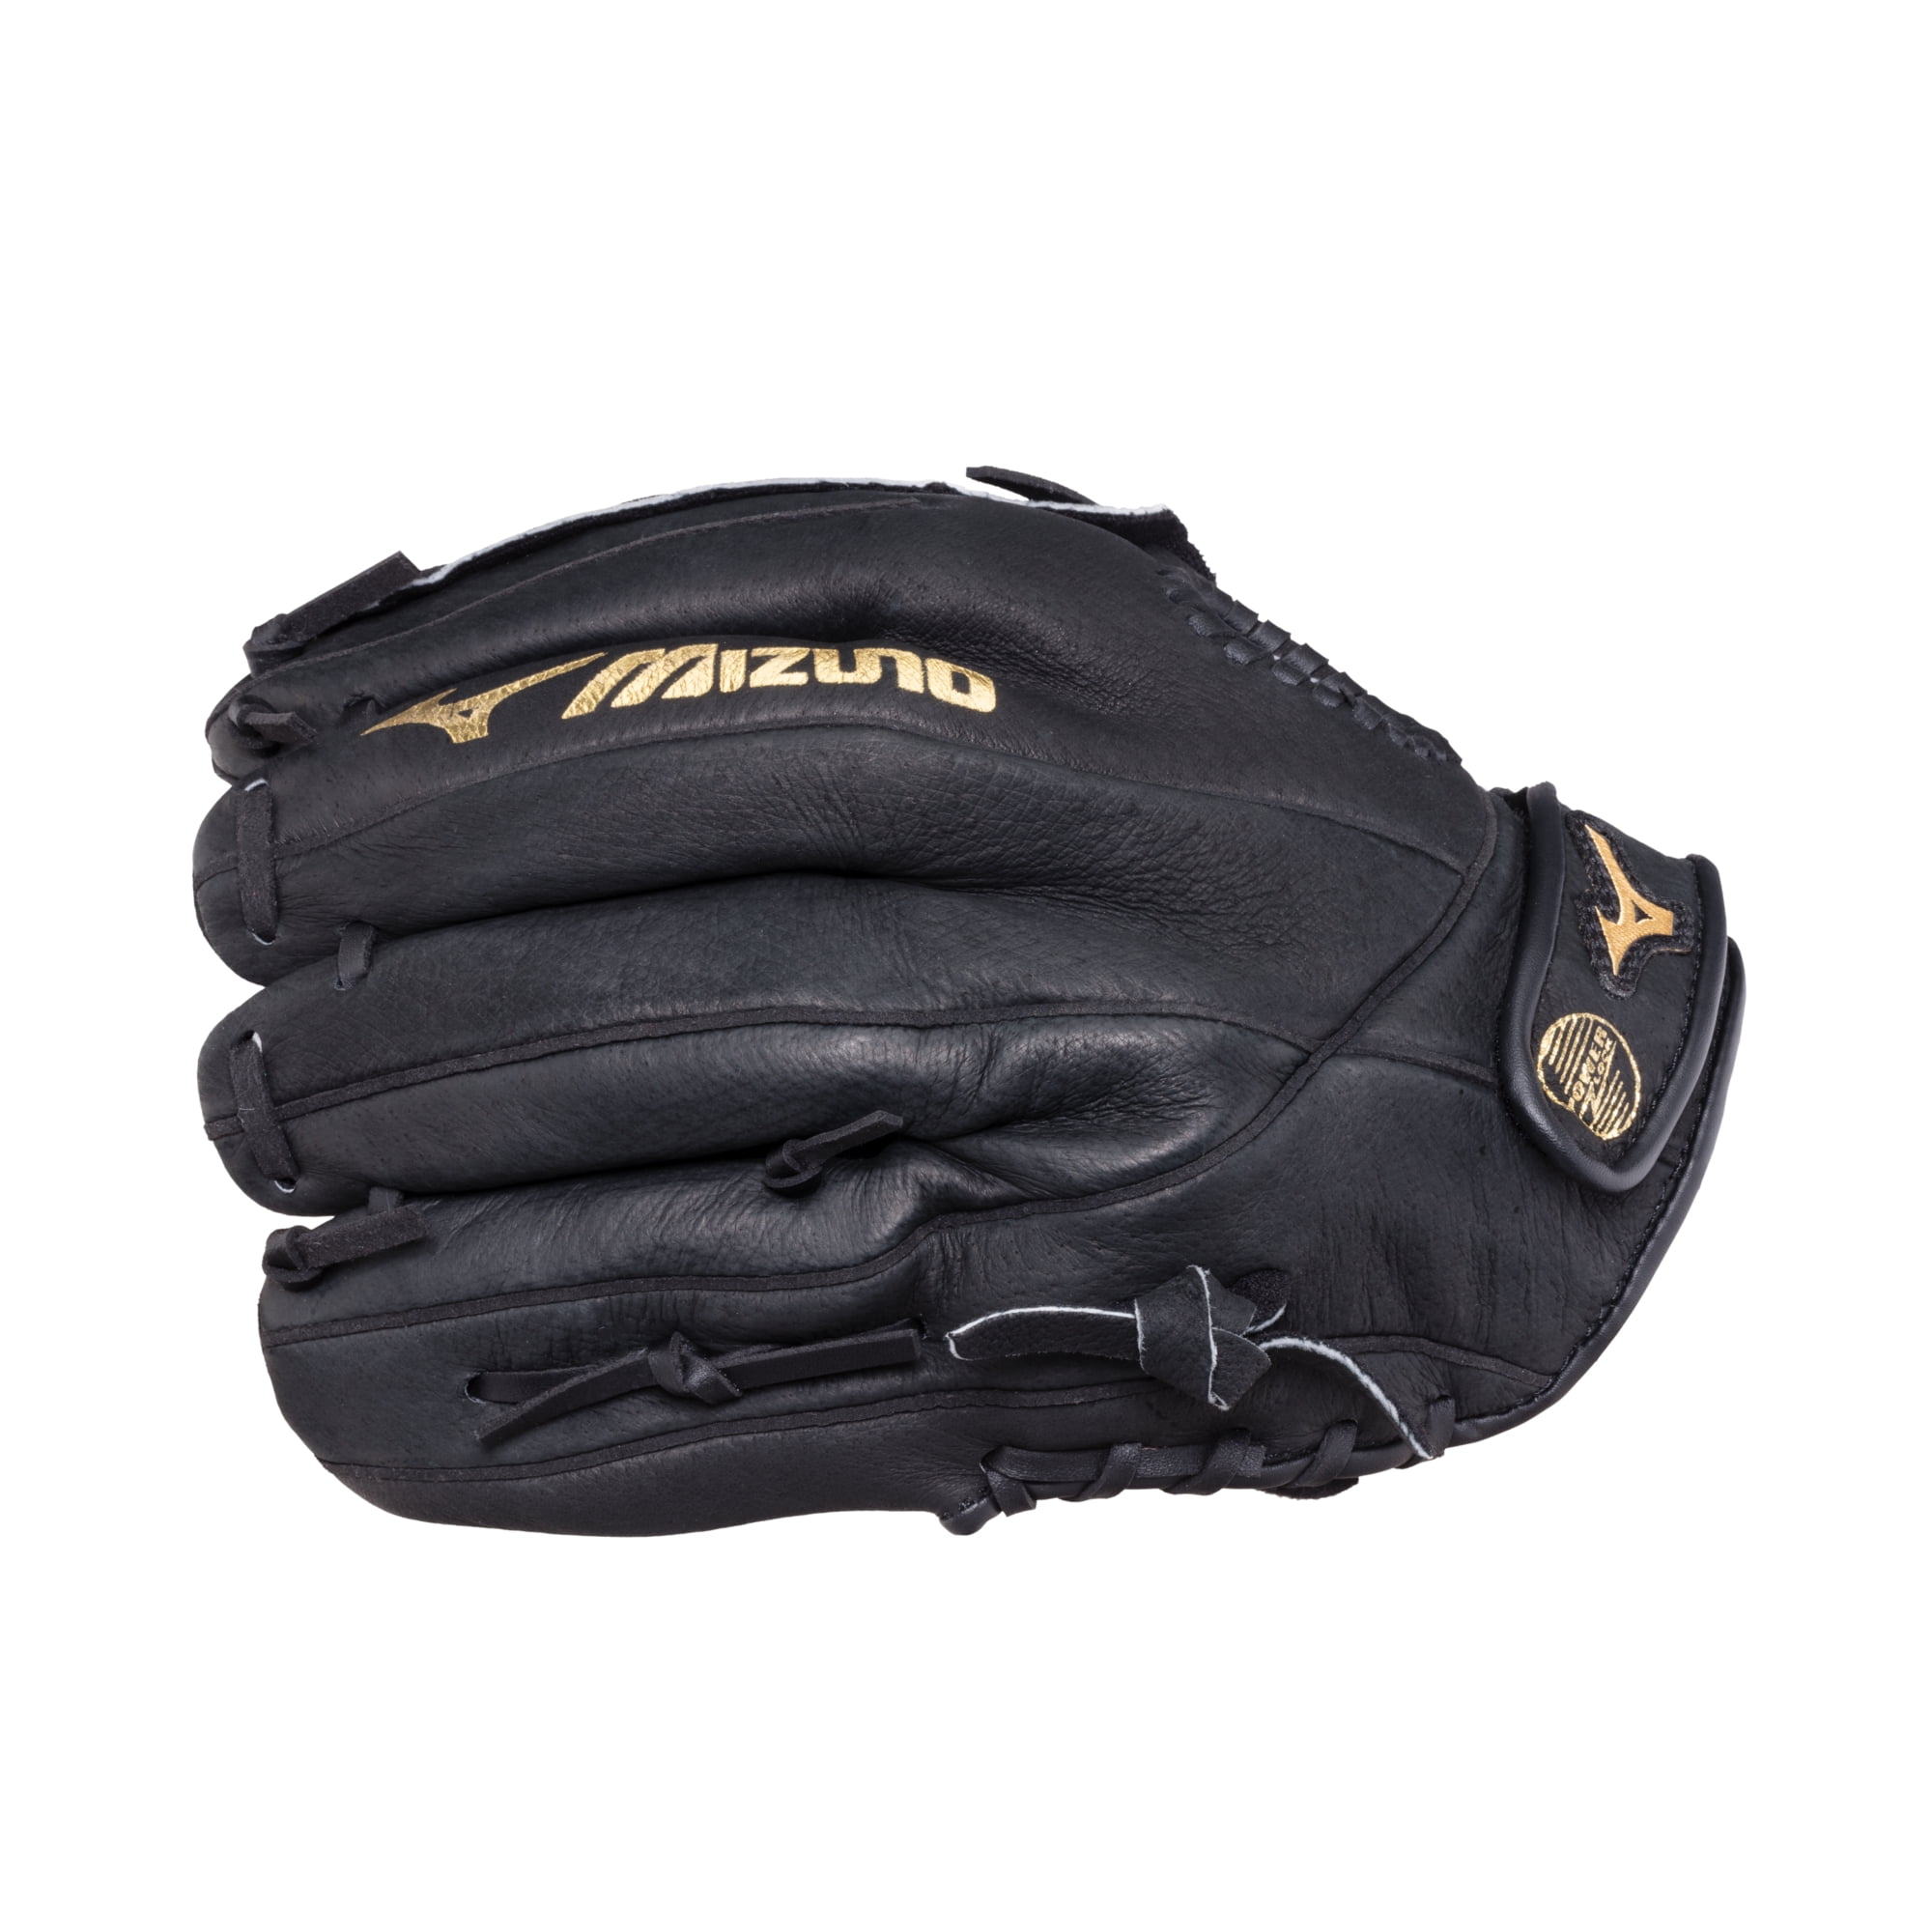 Mizuno Right-handed Baseball Glove 12 Inch Yth80 Mmx 123p for sale online 